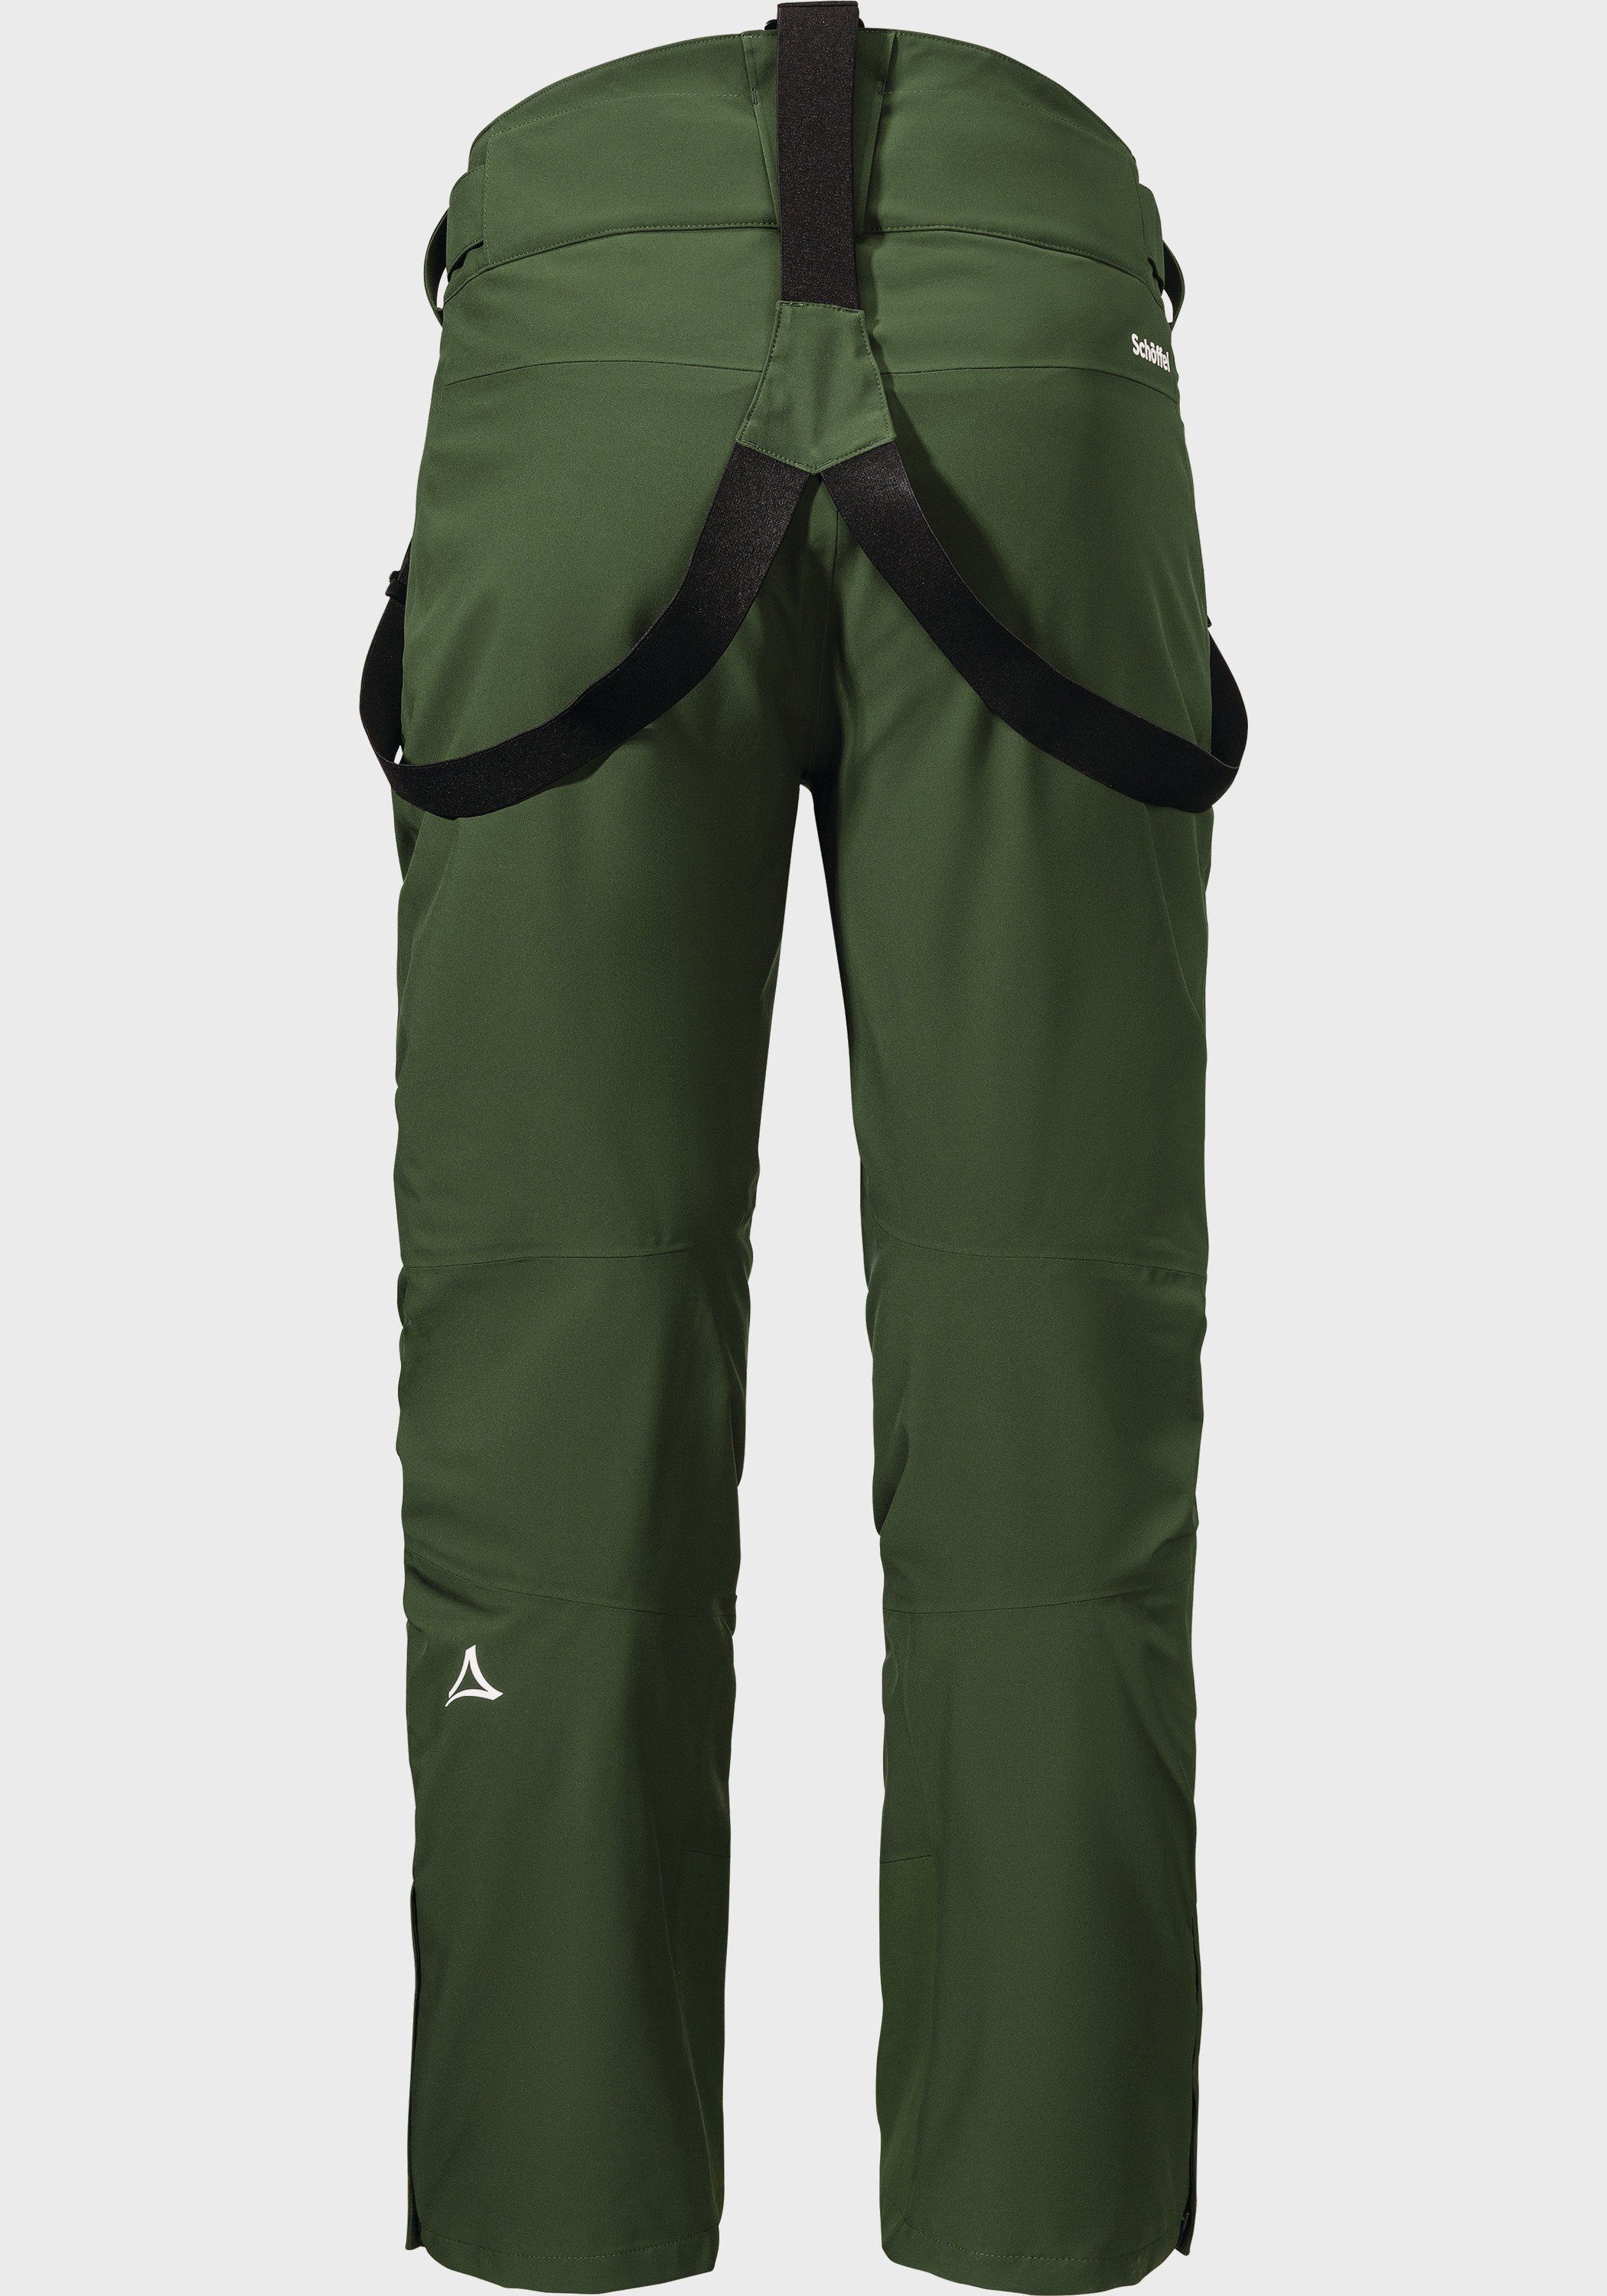 Schöffel Latzhose grün Pants M Weissach Ski